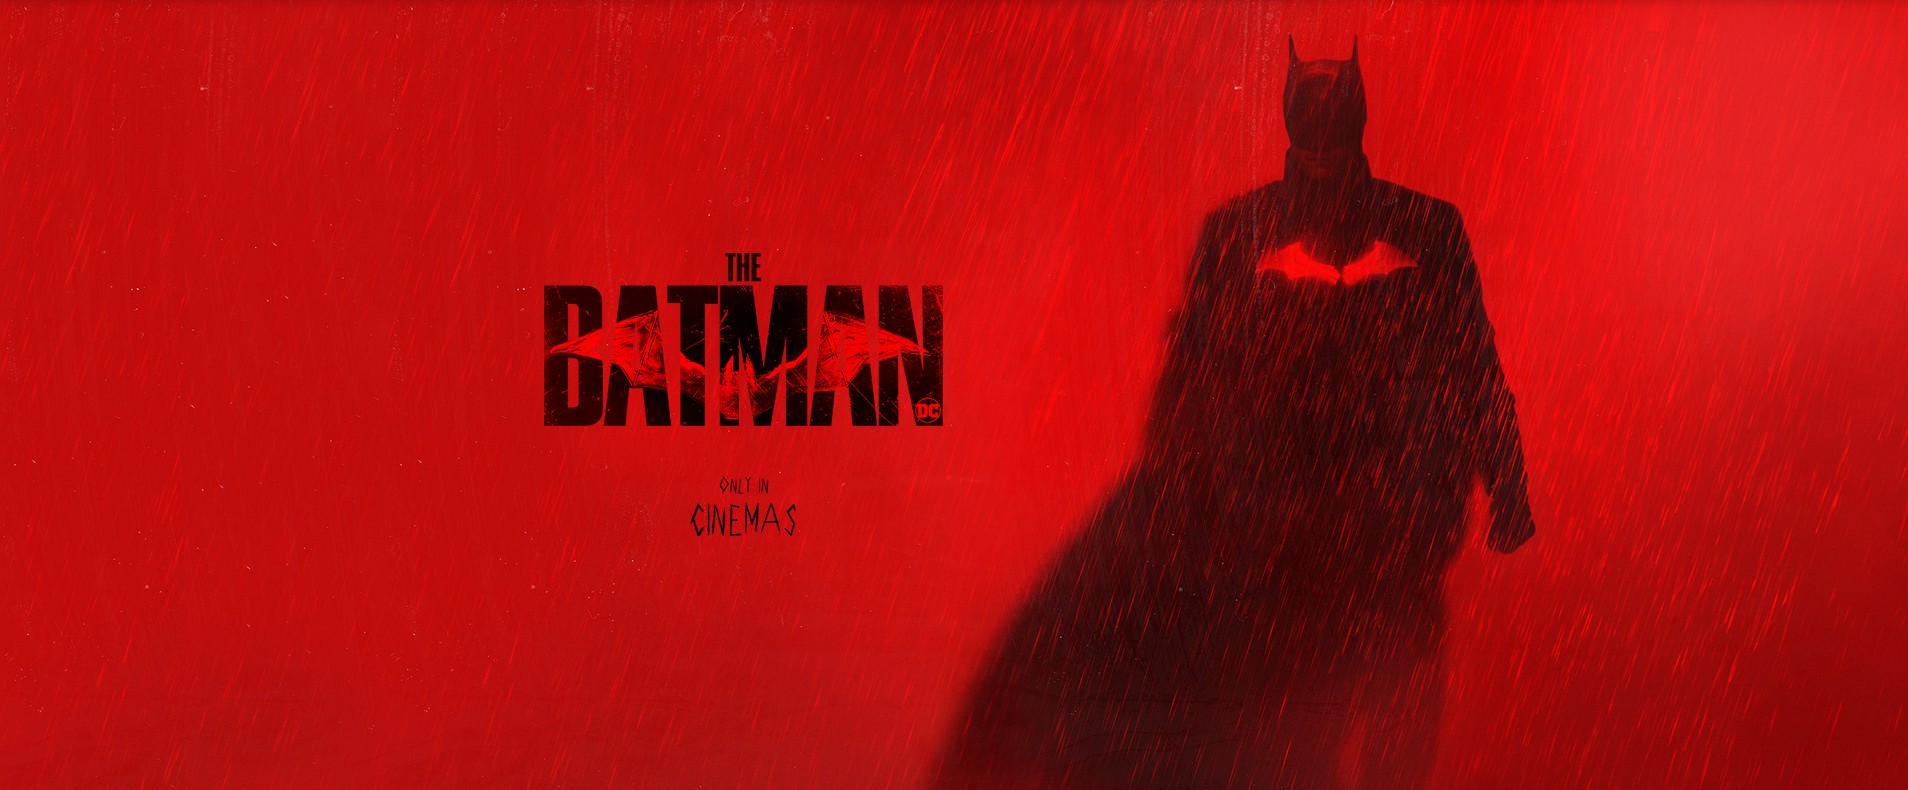 the batman movie - new trailer october 16 2020